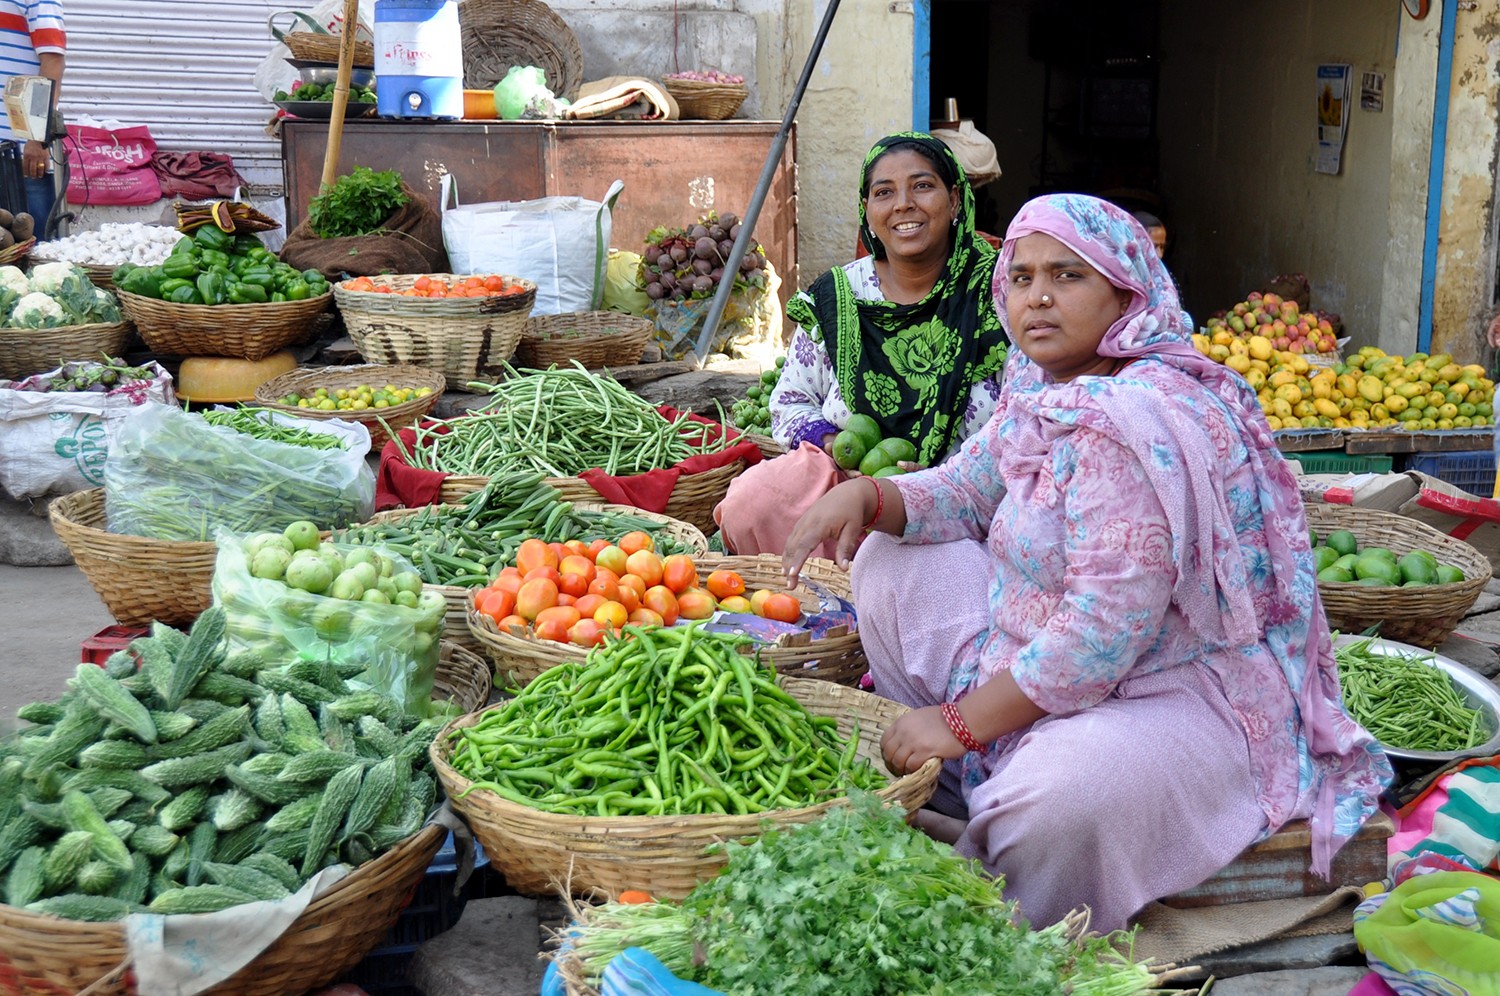 Women selling vegetables in India